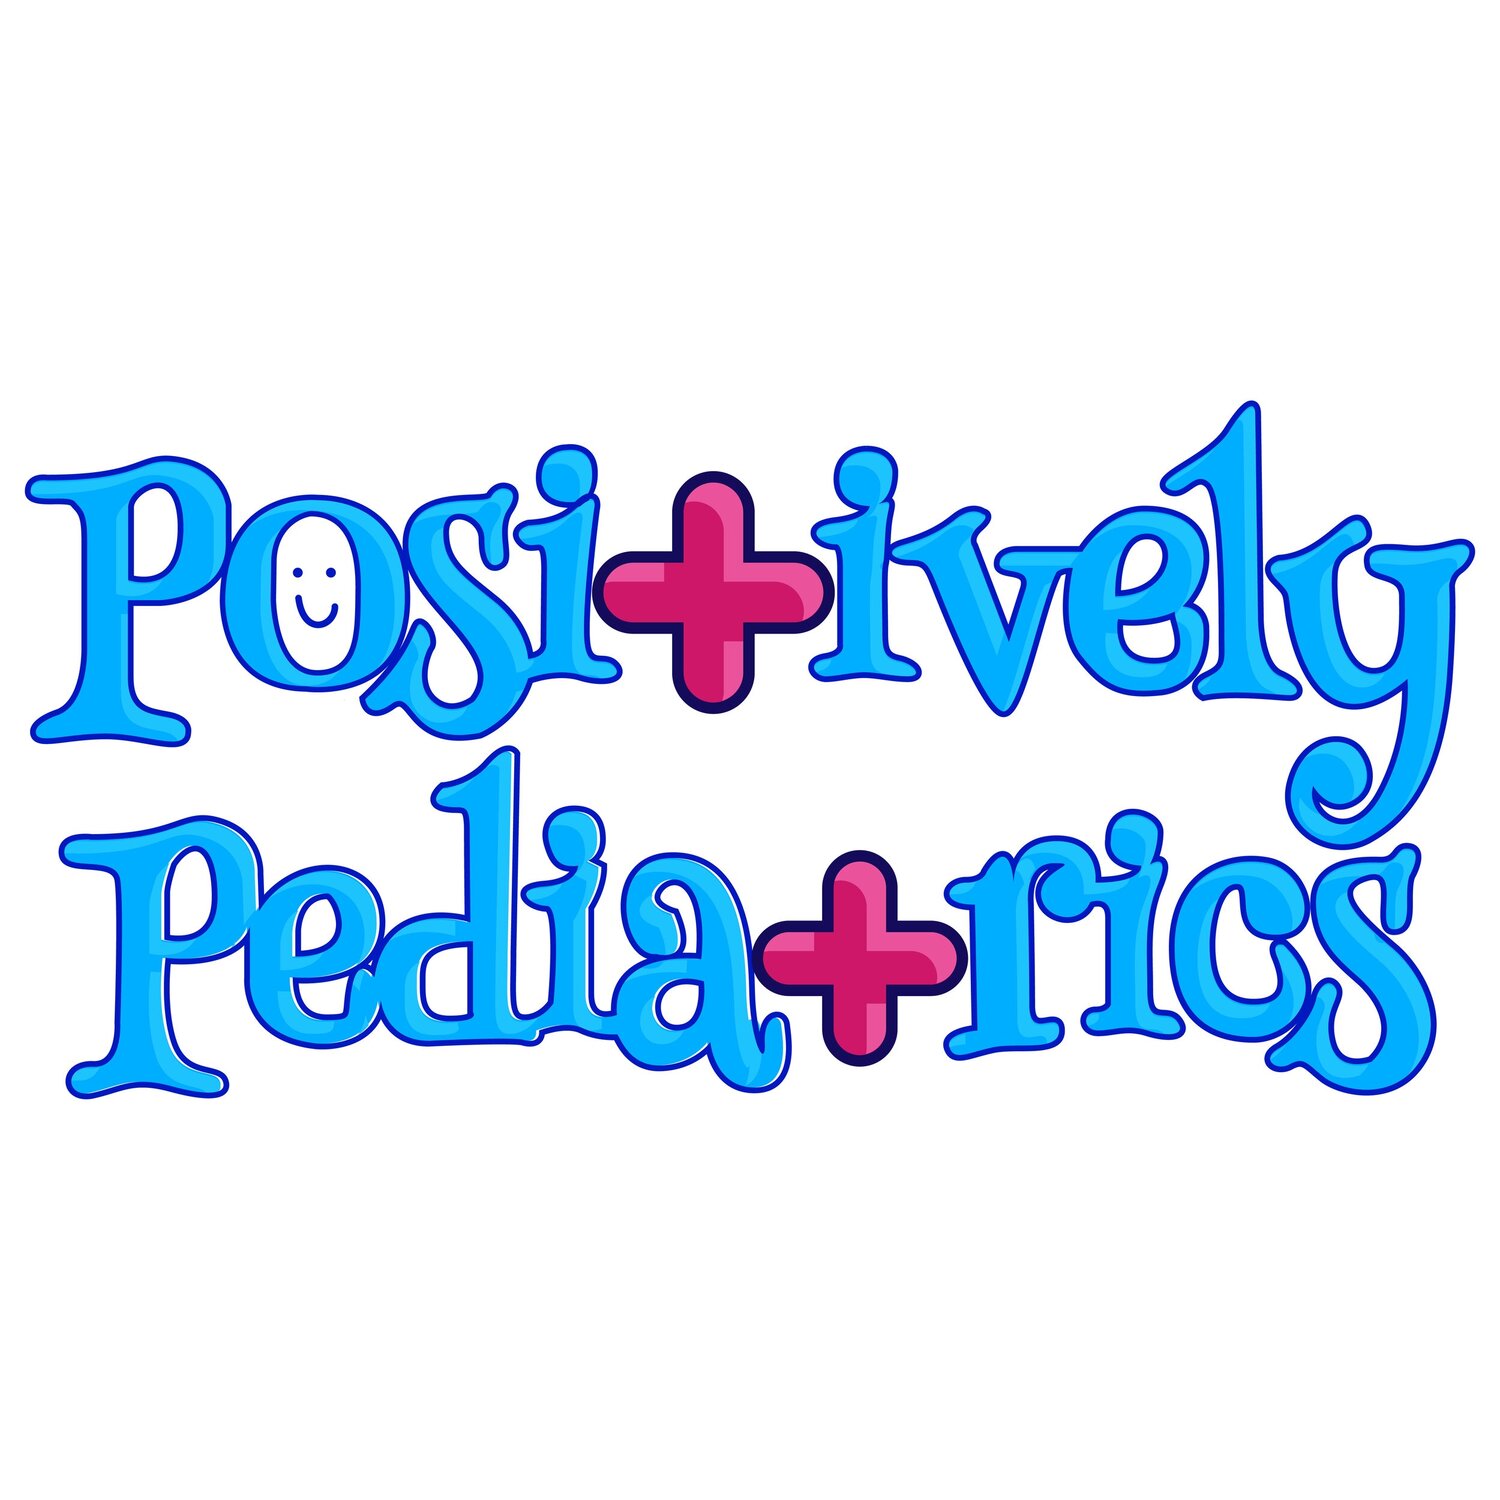 Positively Pediatrics 